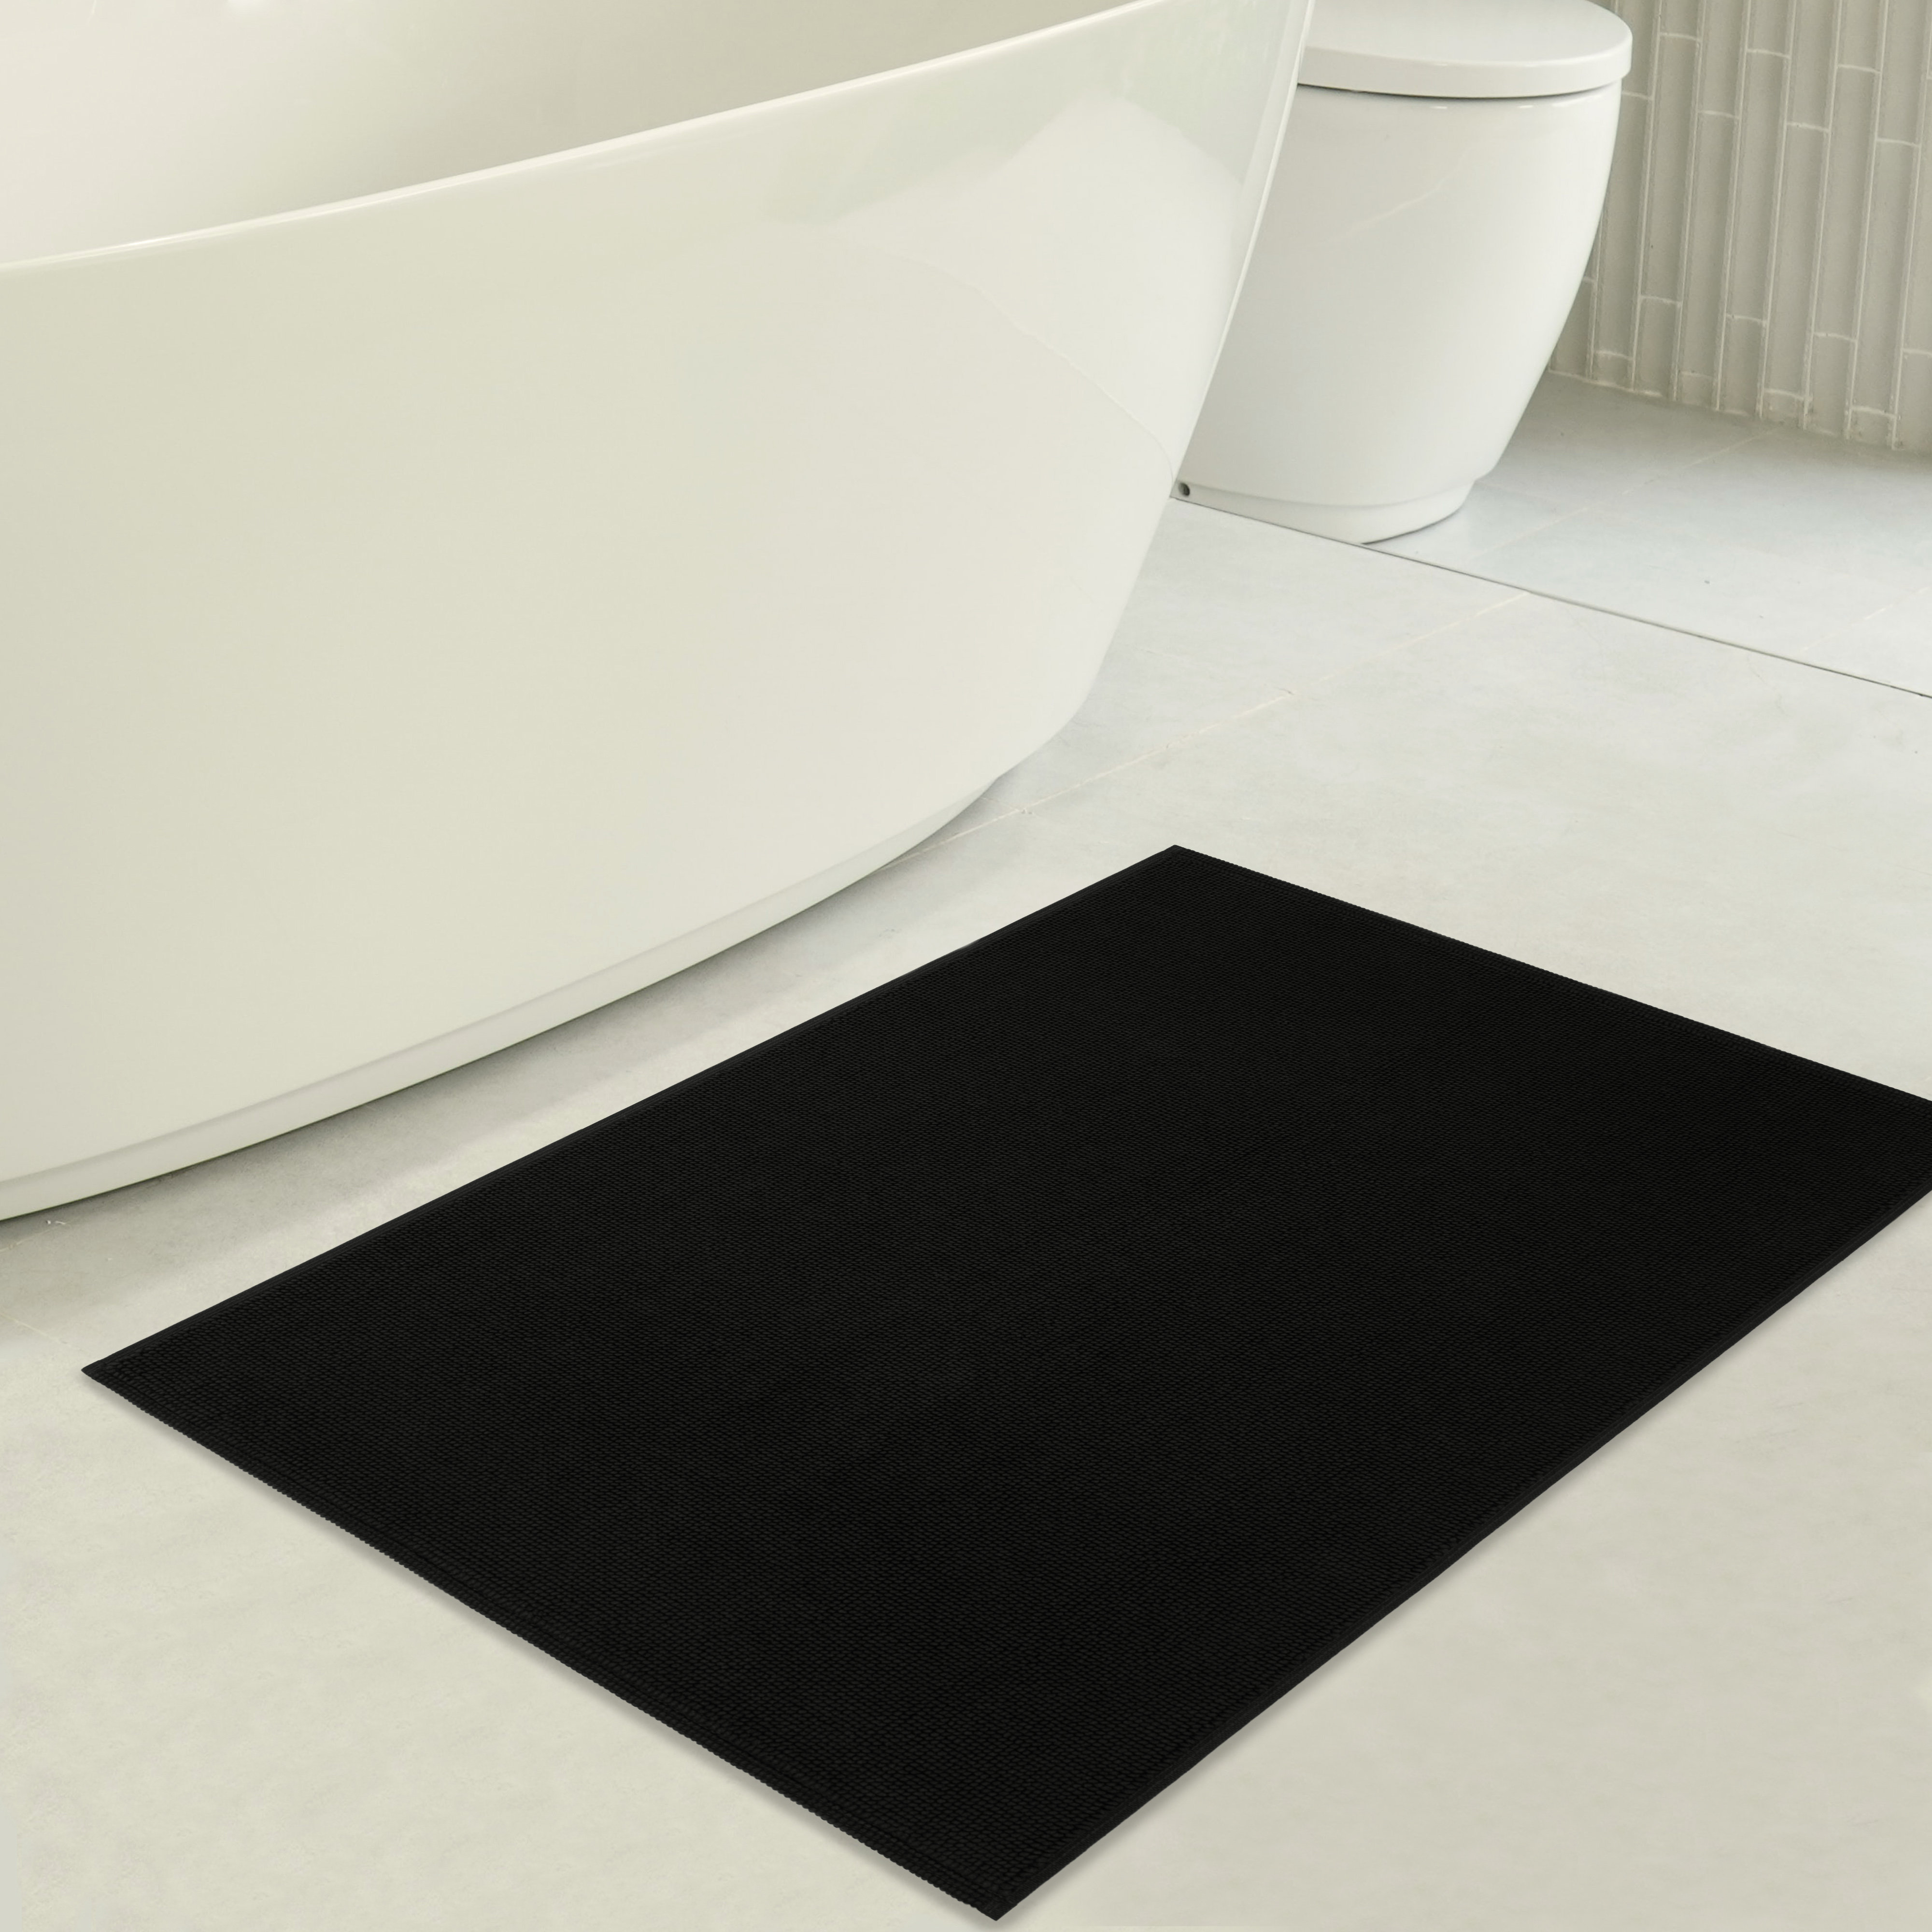 Super Absorbent Bathroom Mat, Non Slip Soft Wrinkle Free Bathroom